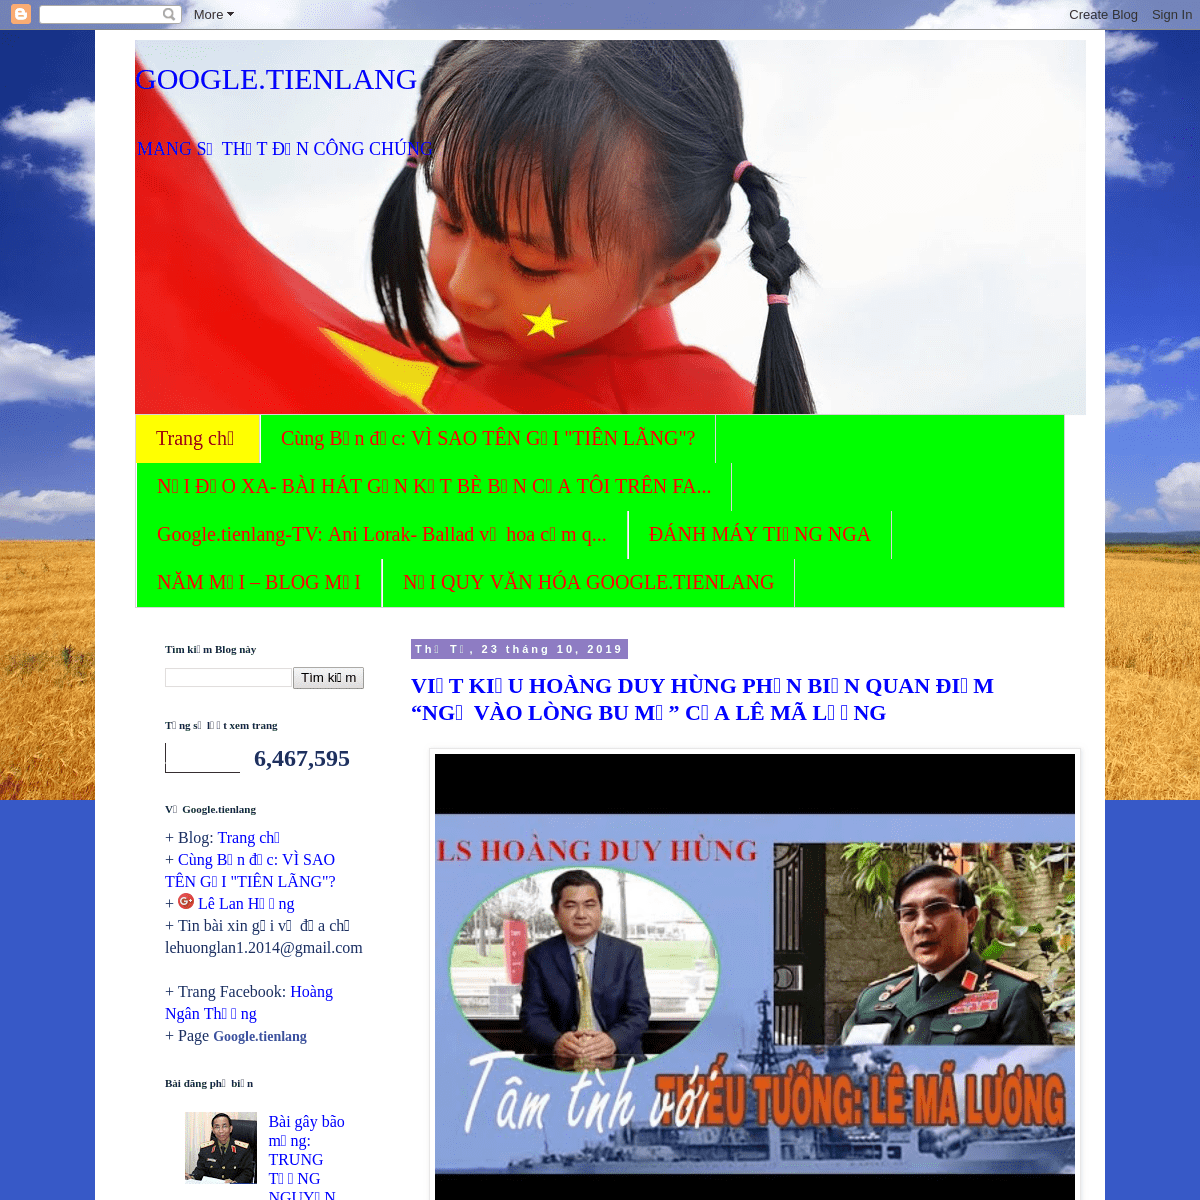 A complete backup of googletienlang2014.blogspot.com